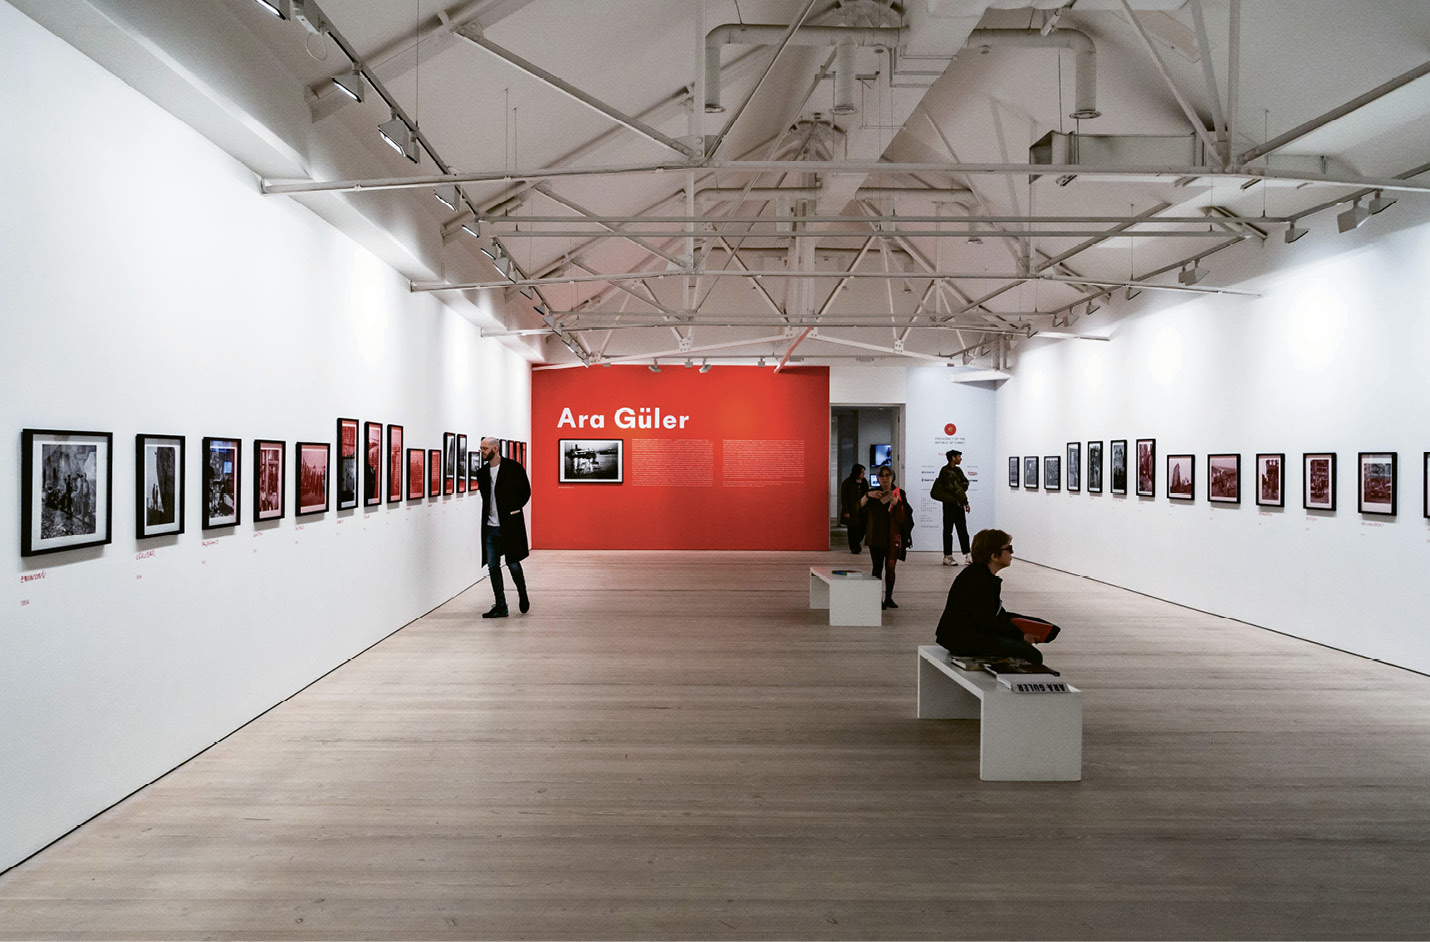 A retrospective of the works of Turkish photojournalist Ara Güler at Chelsea’s Saatchi Gallery last spring